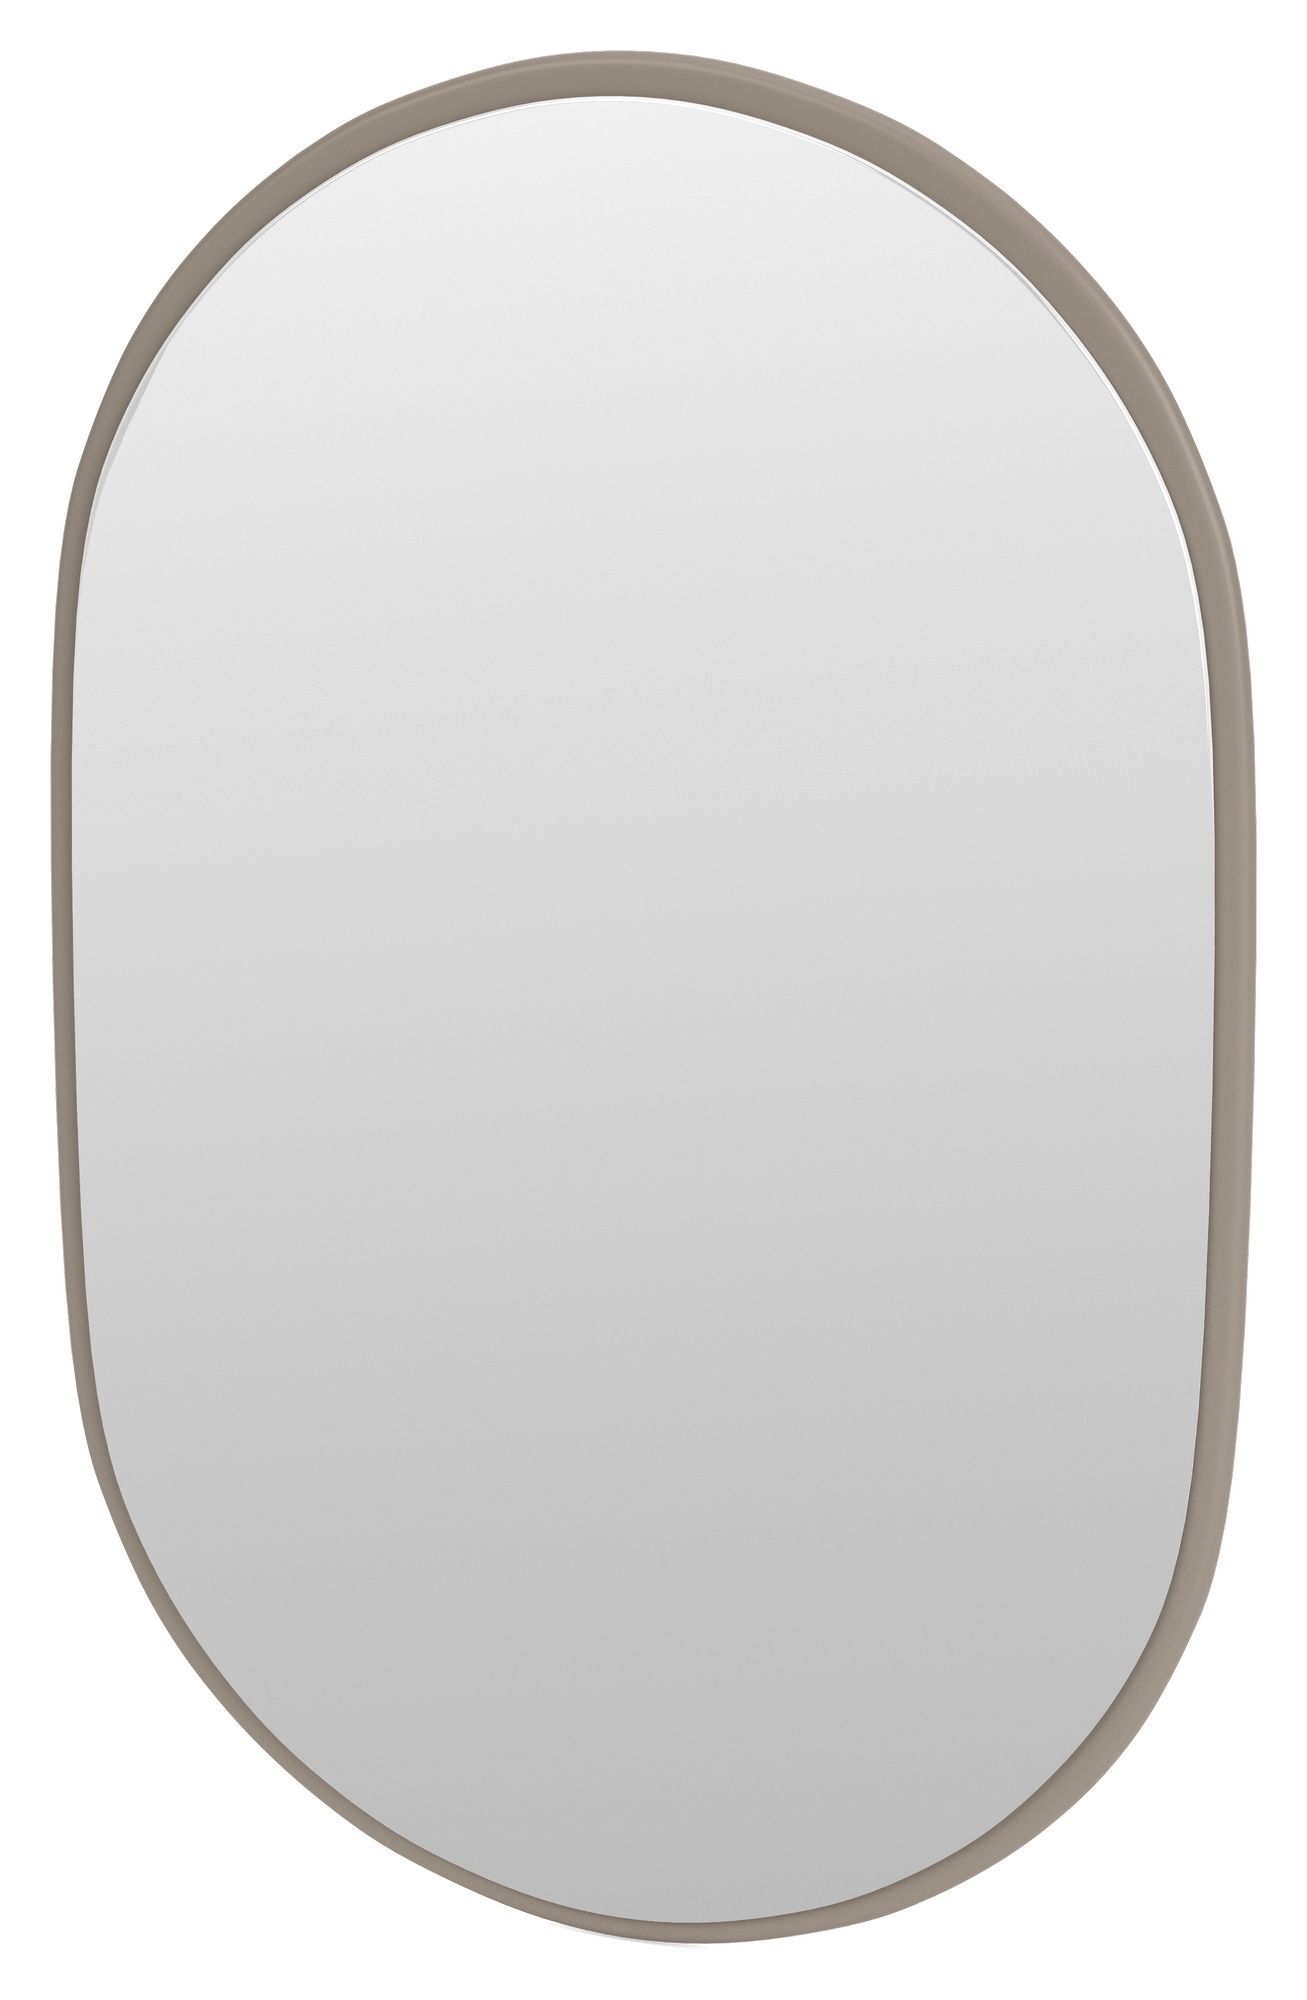 Montana LOOK Ovalt speil, 141-Truffle   Unoliving